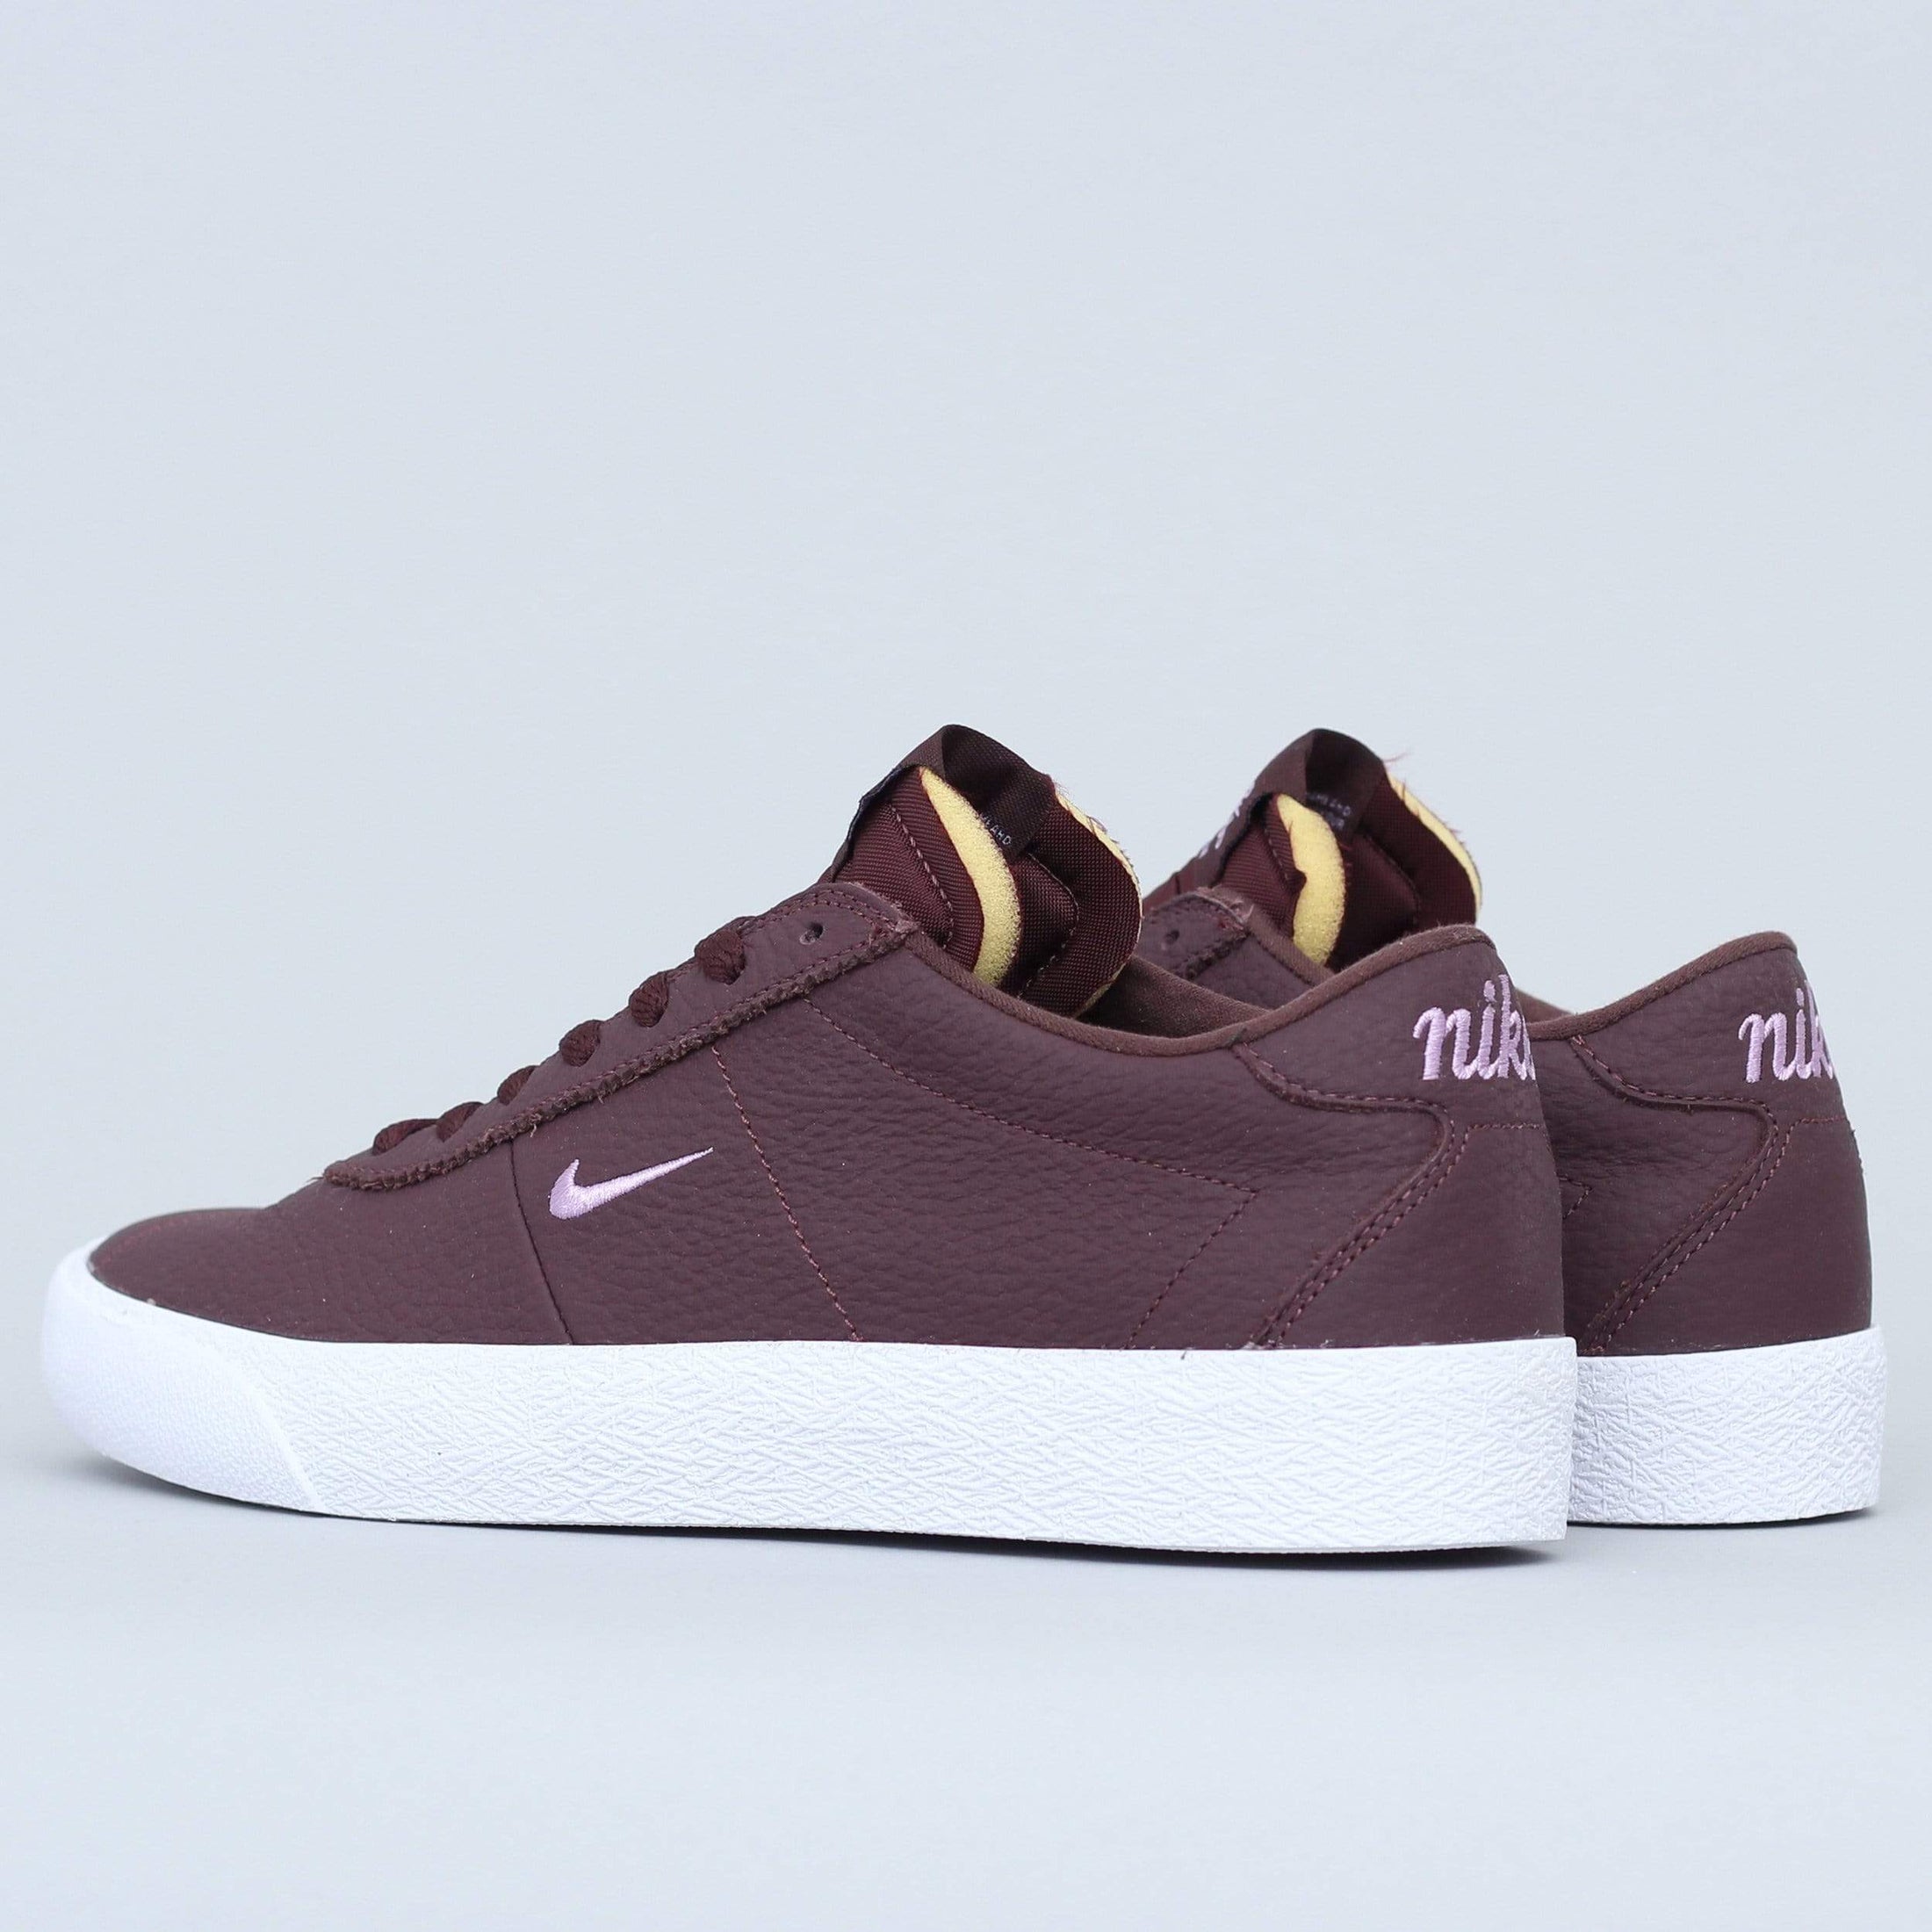 Nike SB Bruin Shoes Mahogany / Violet Star